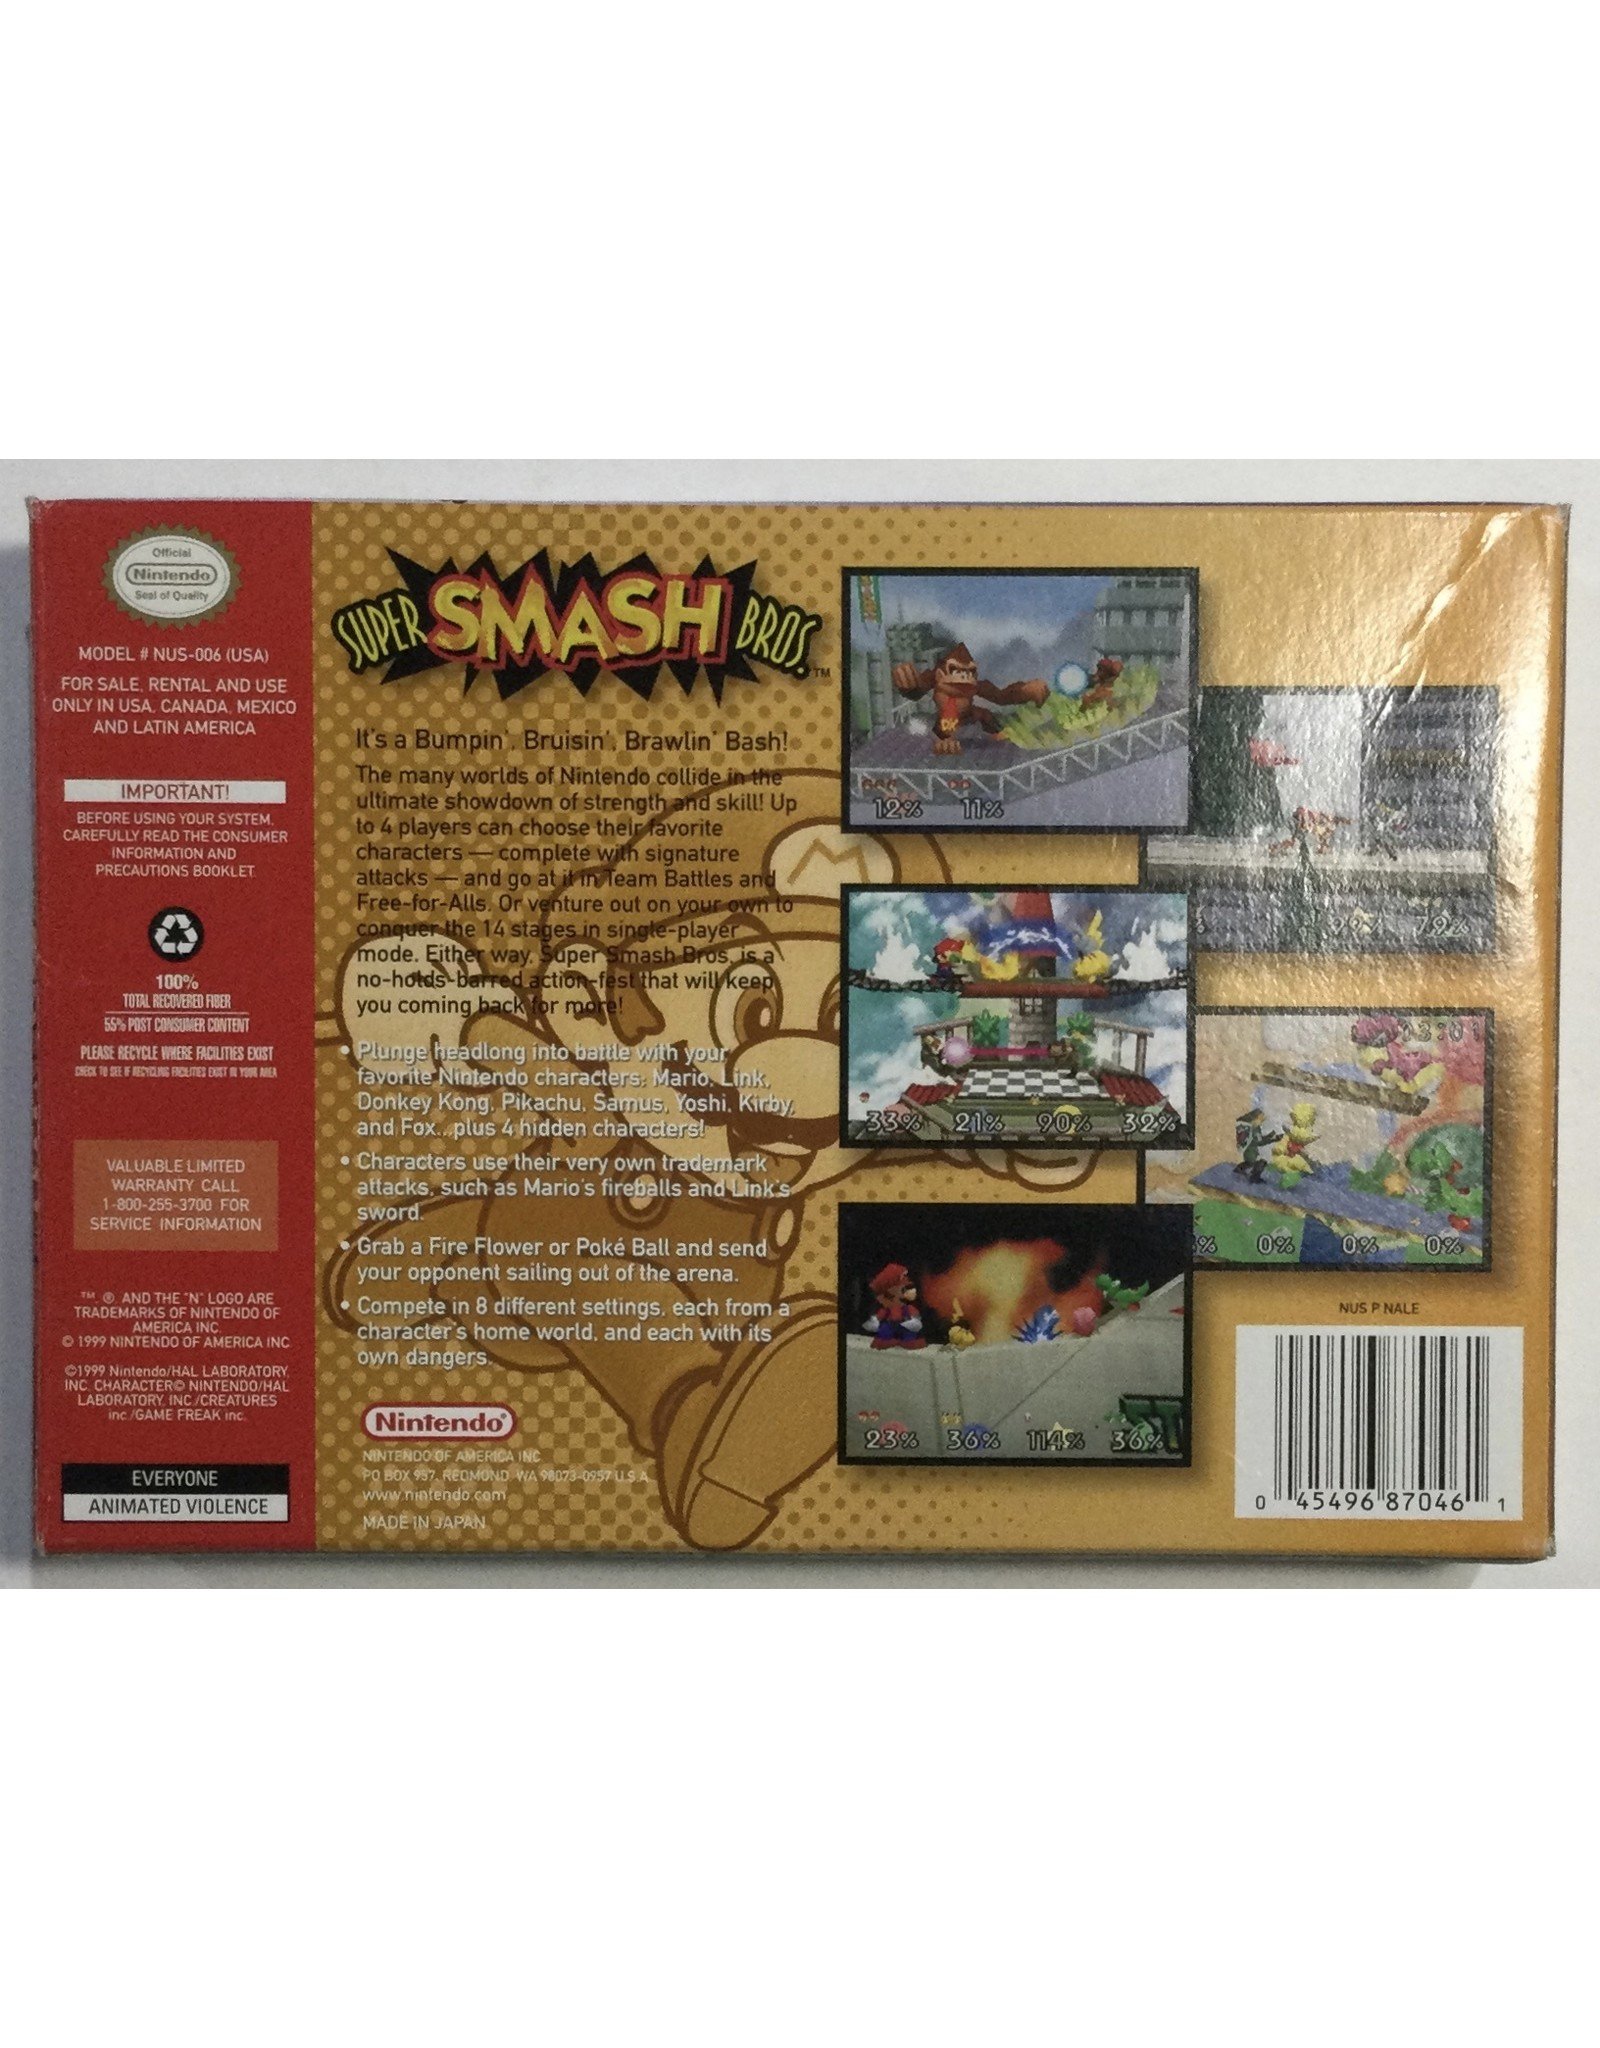 Nintendo Super Smash Bros. for Nintendo 64 (N64)